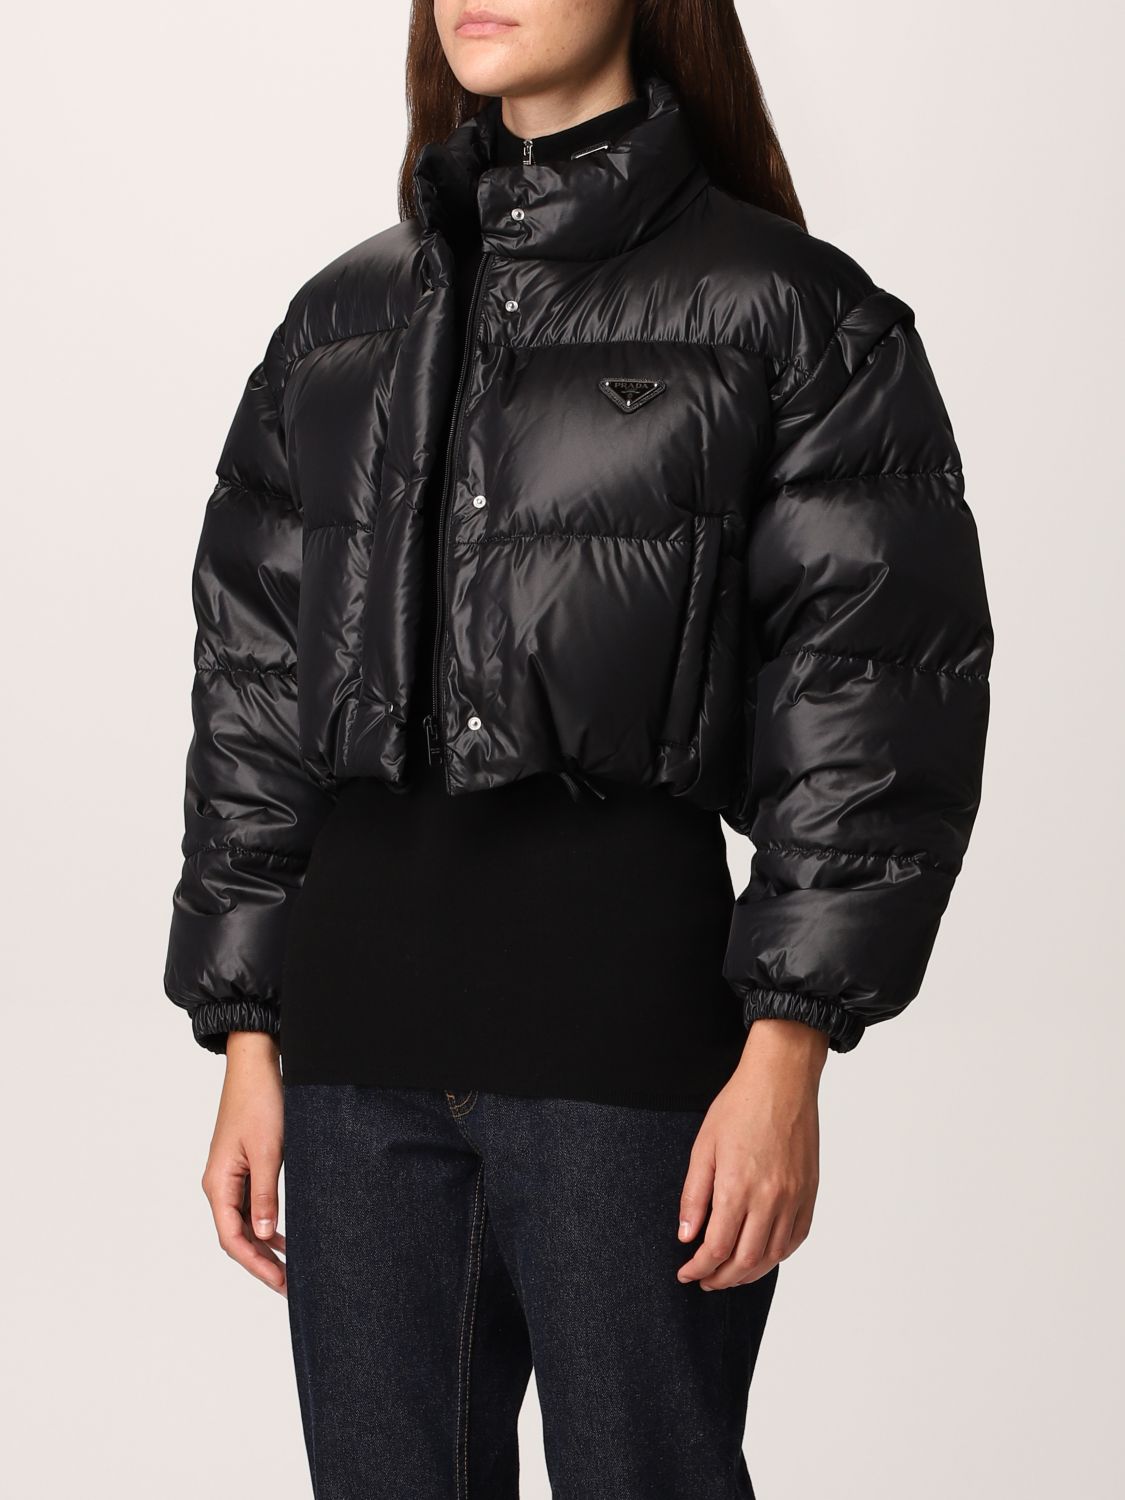 PRADA: down jacket in cropped nylon - Black | Prada jacket 291805 1IE0 ...